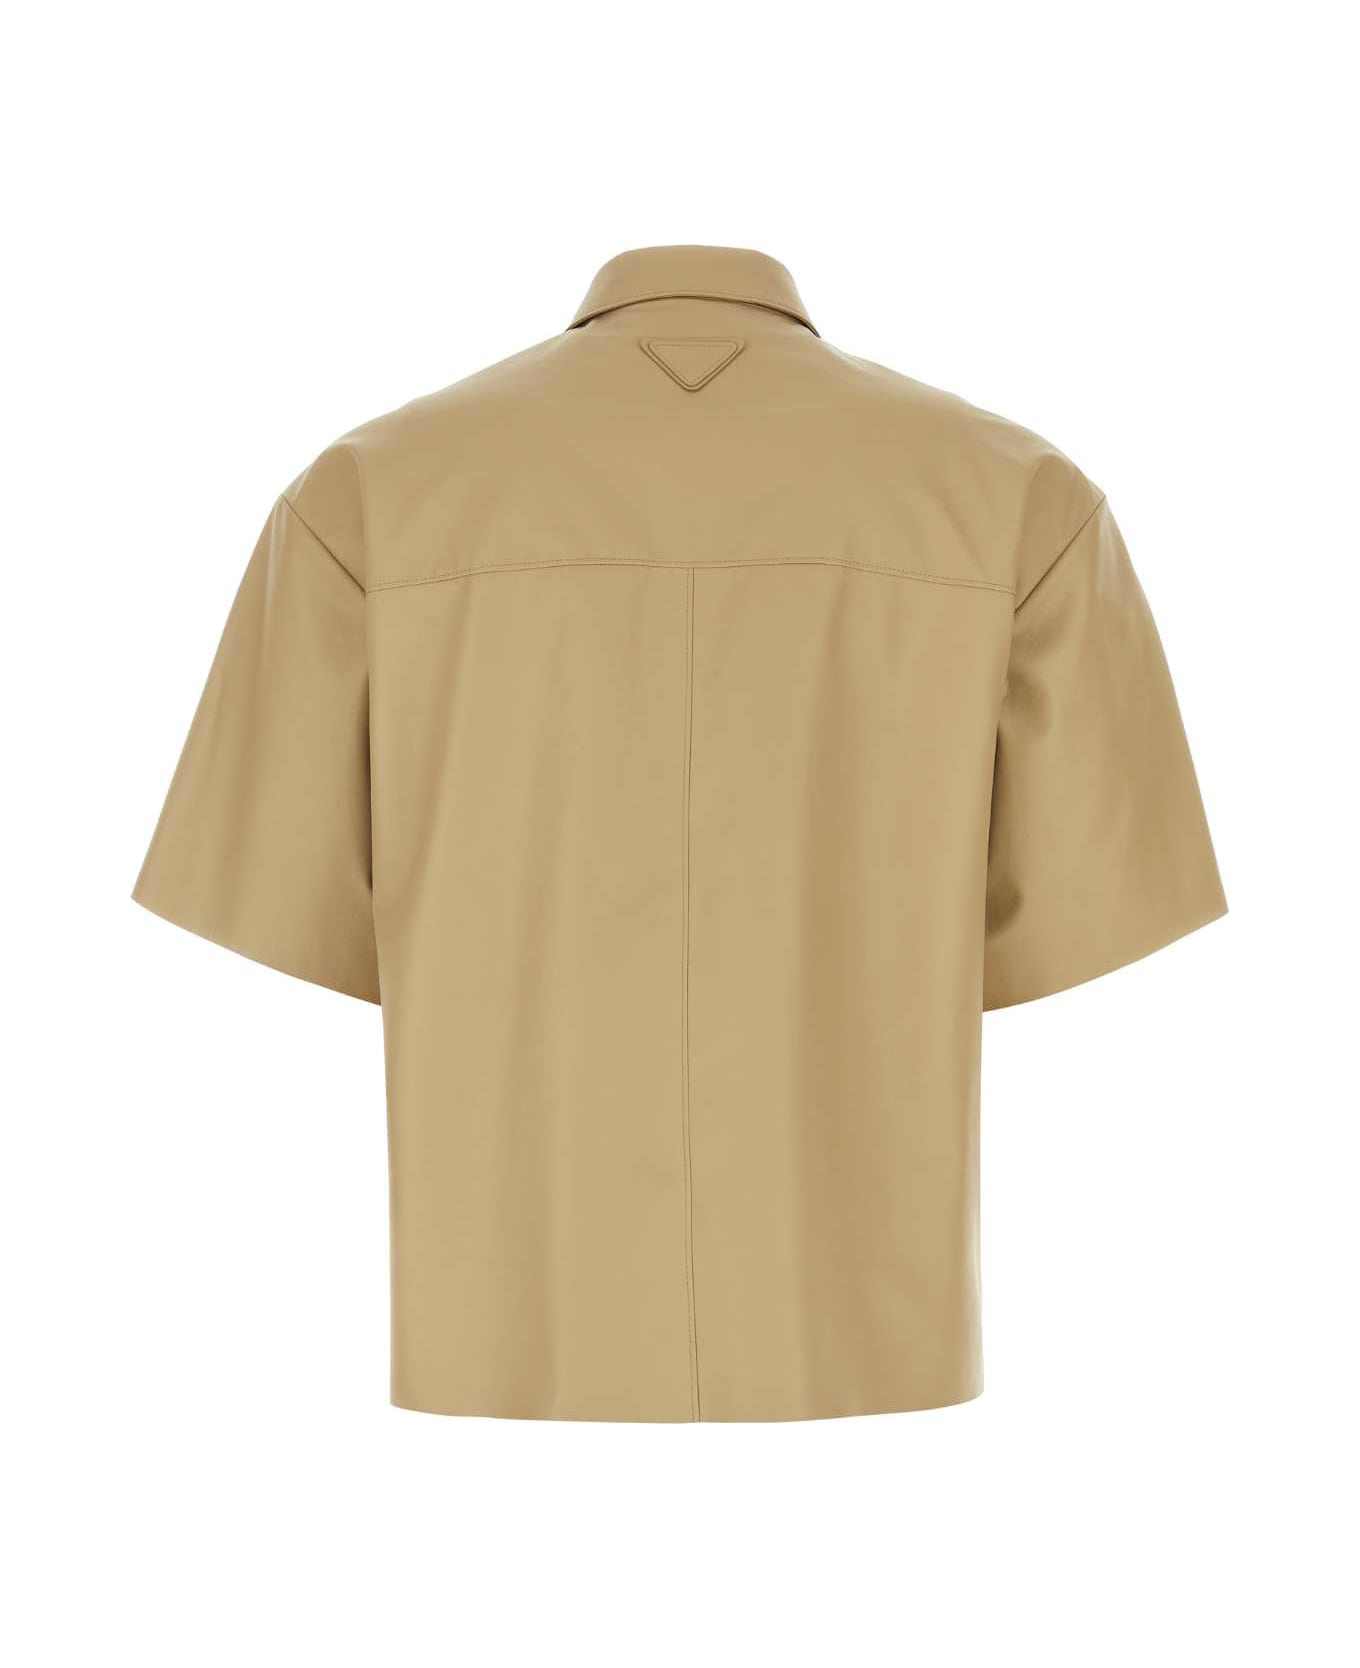 Prada Beige Leather Shirt - KAKI